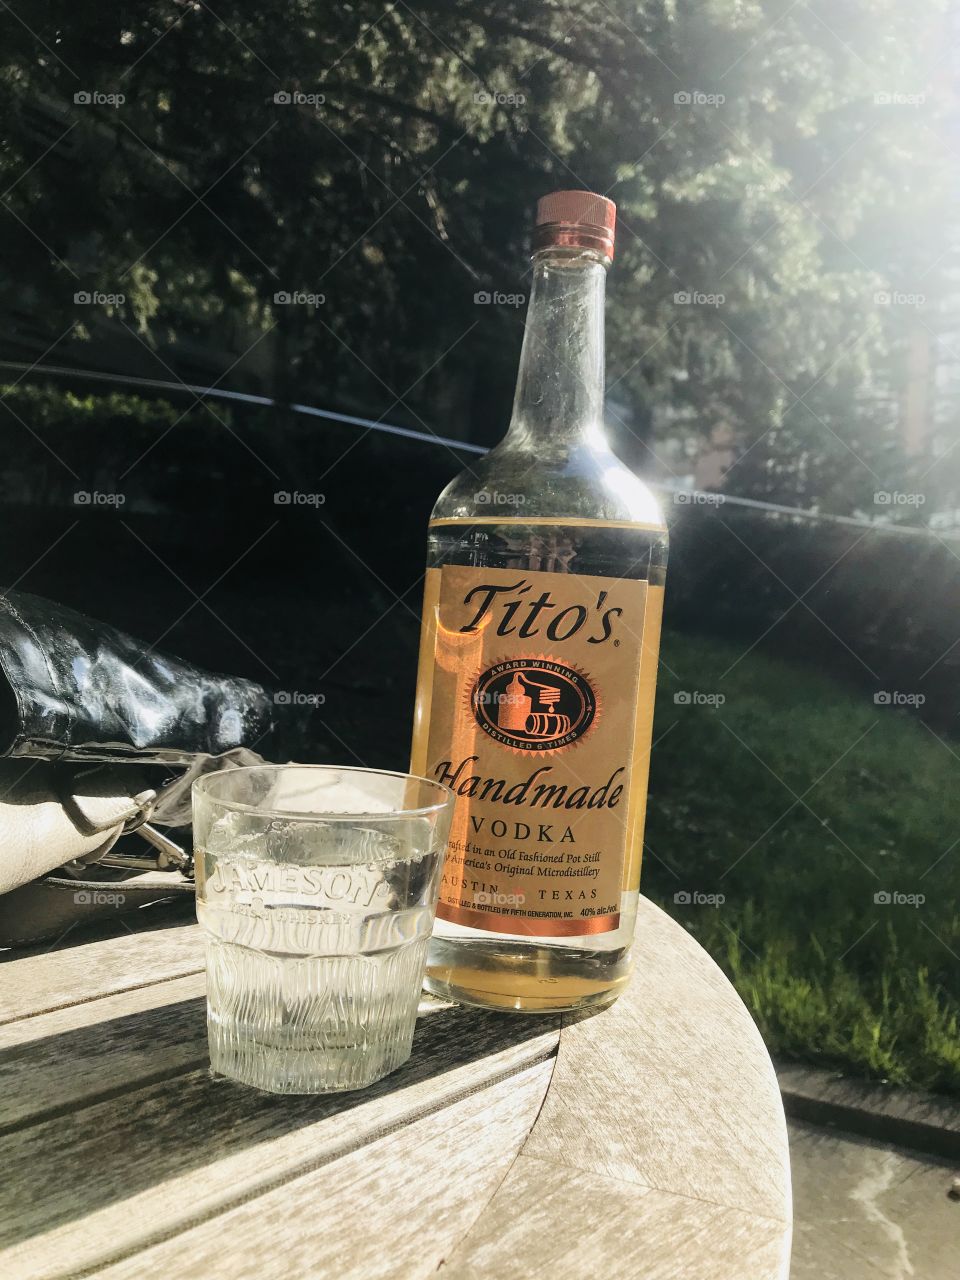 Titos, Perrier & sun. Best way to start the weekend 